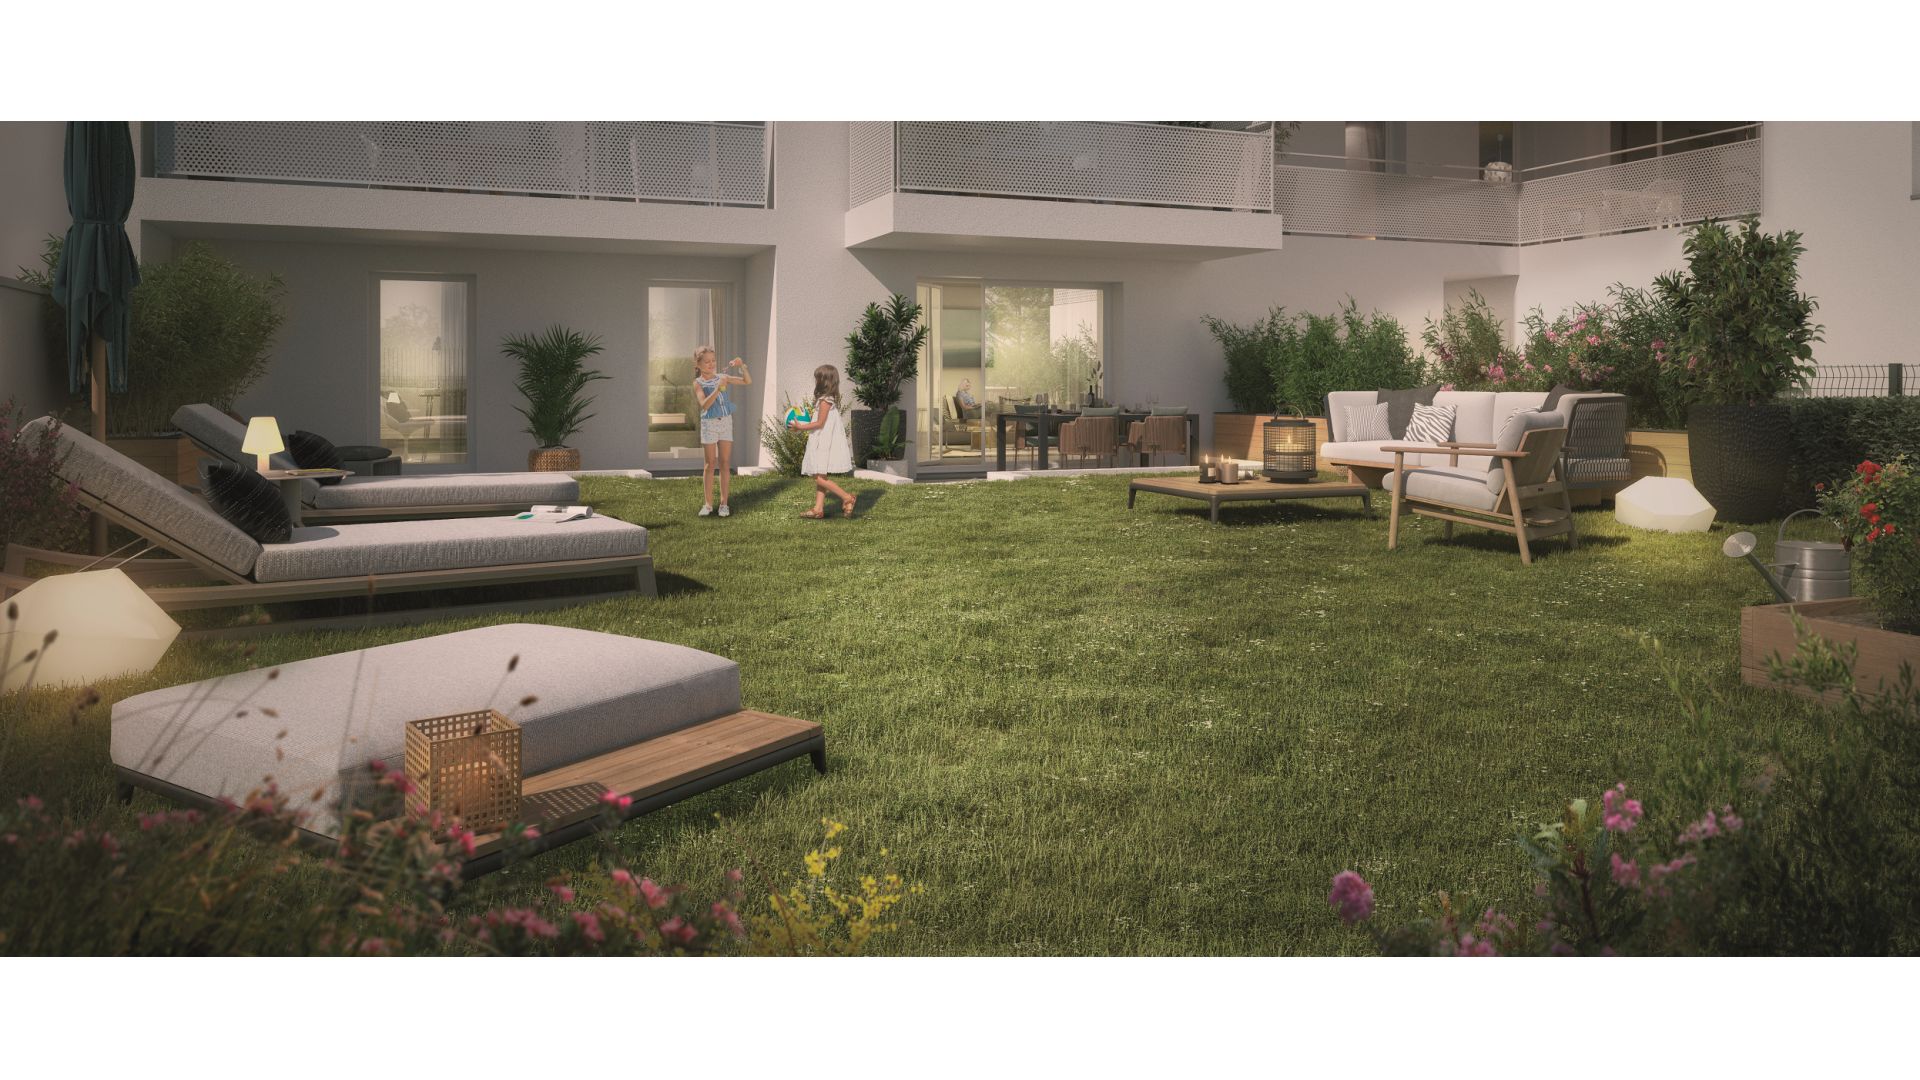 Greencity immobilier - achat appartements neufs du T1 au T3 - Résidence L'Olympie - 78250 Meulan-en-Yvelines - vue terrasse